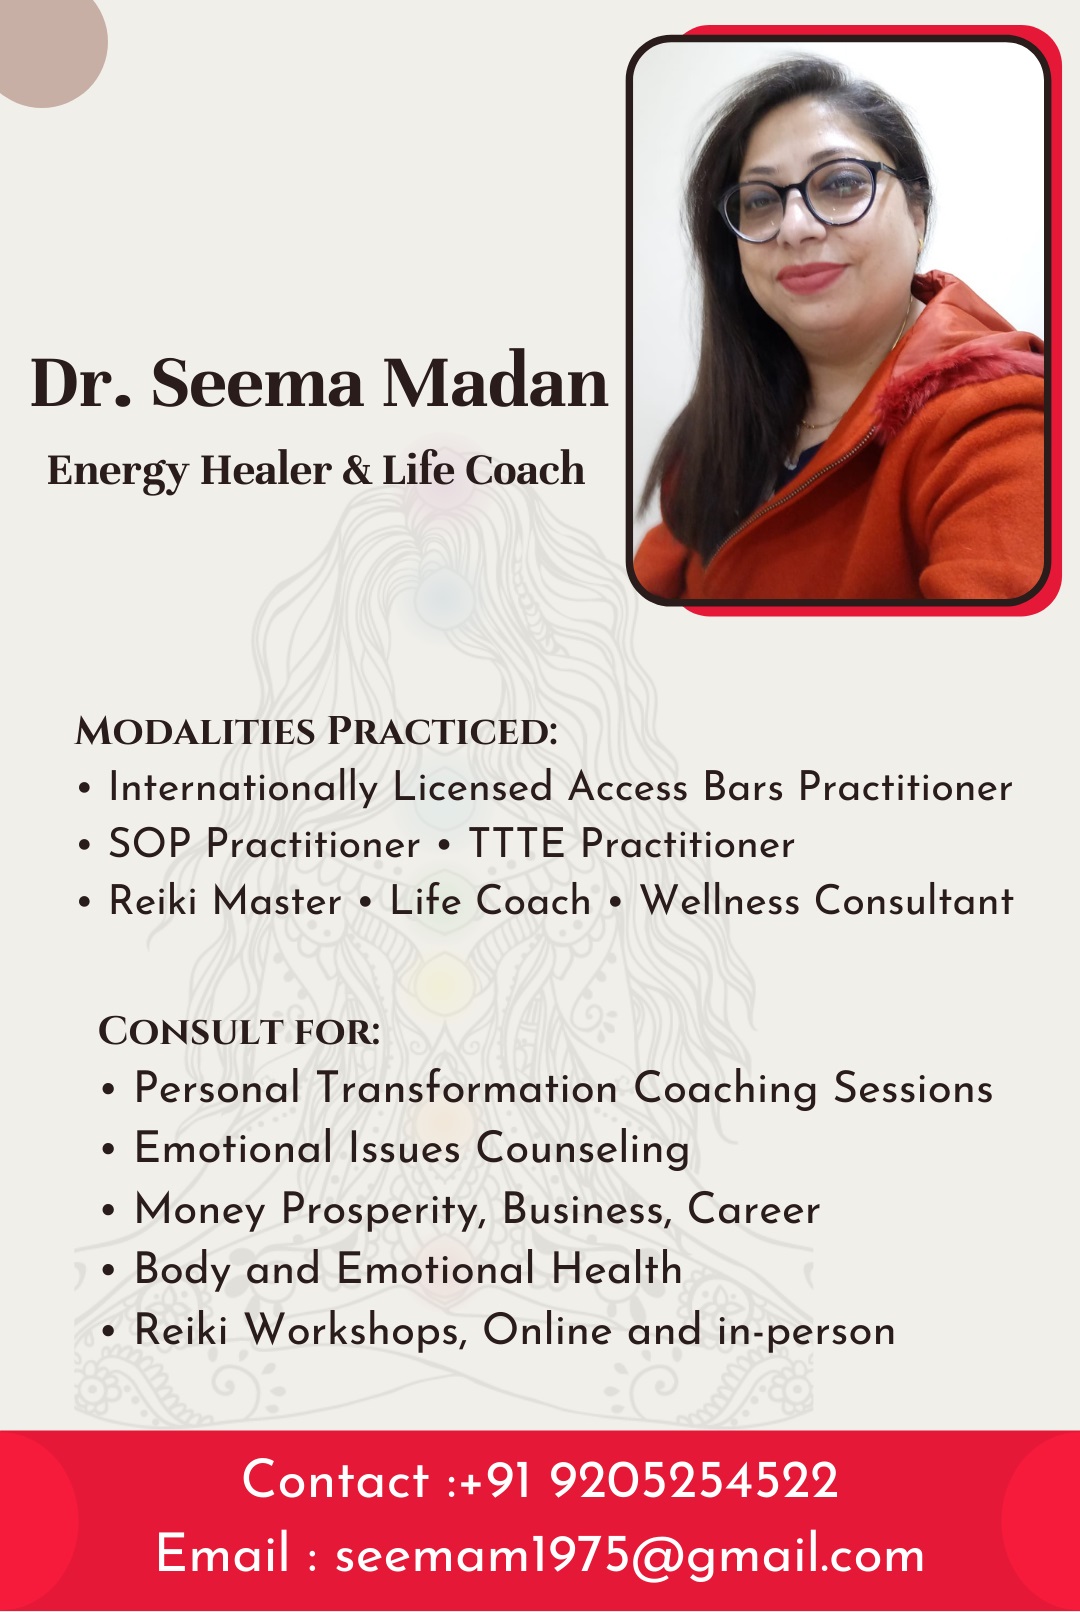 Dr. Seema Madan - Energy Healer & Life Coach - Jodhpur